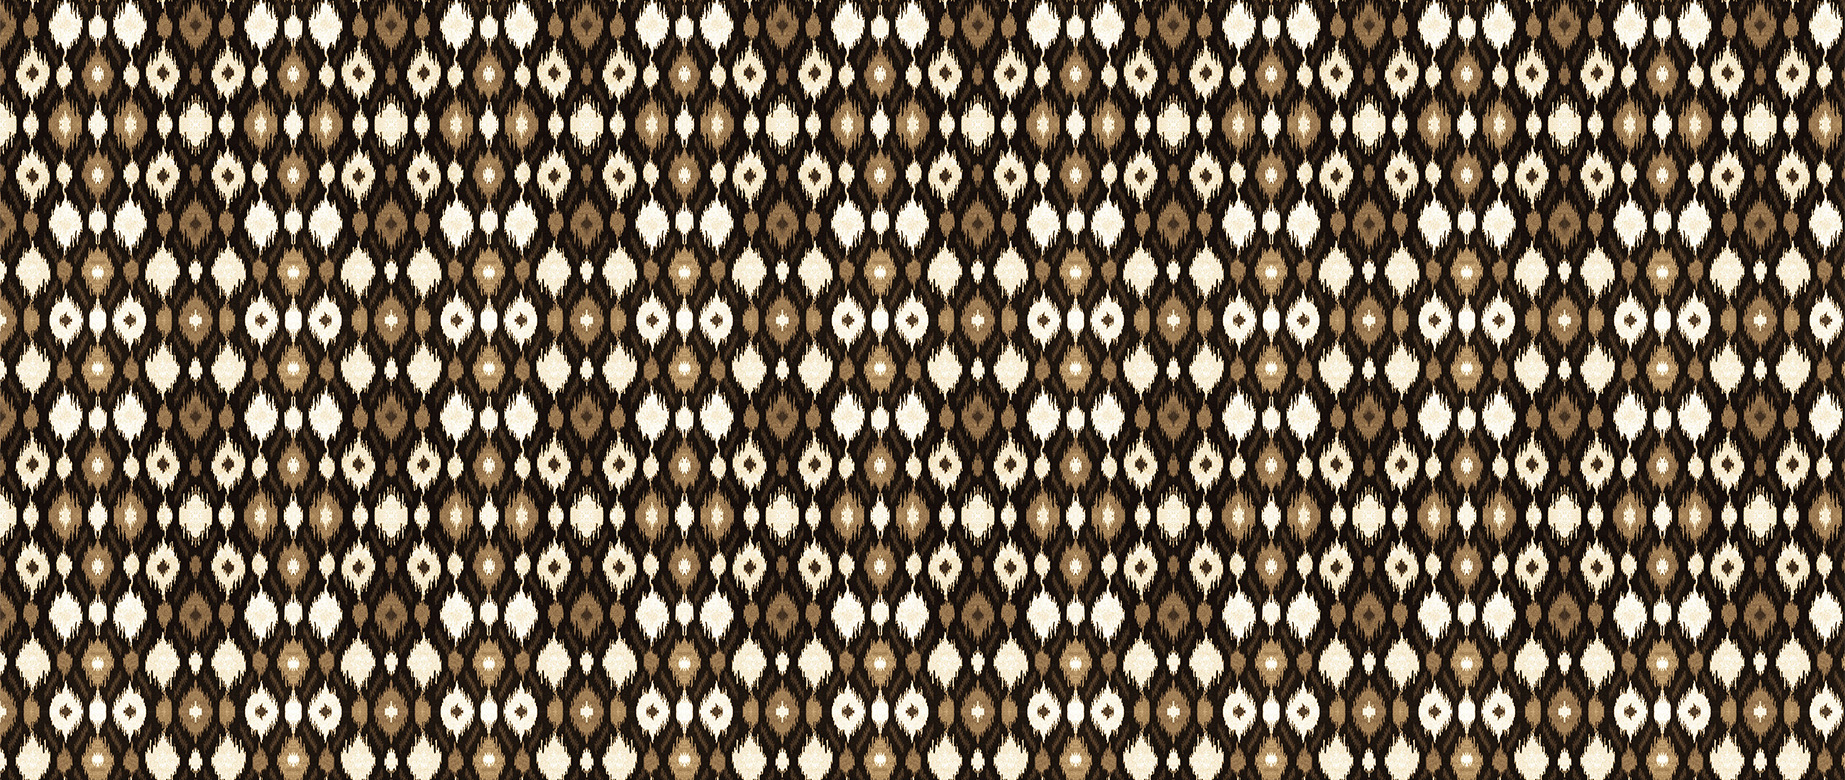 dark-geometric-ikat-repeat-pattern-wallpapers-full-wide-view